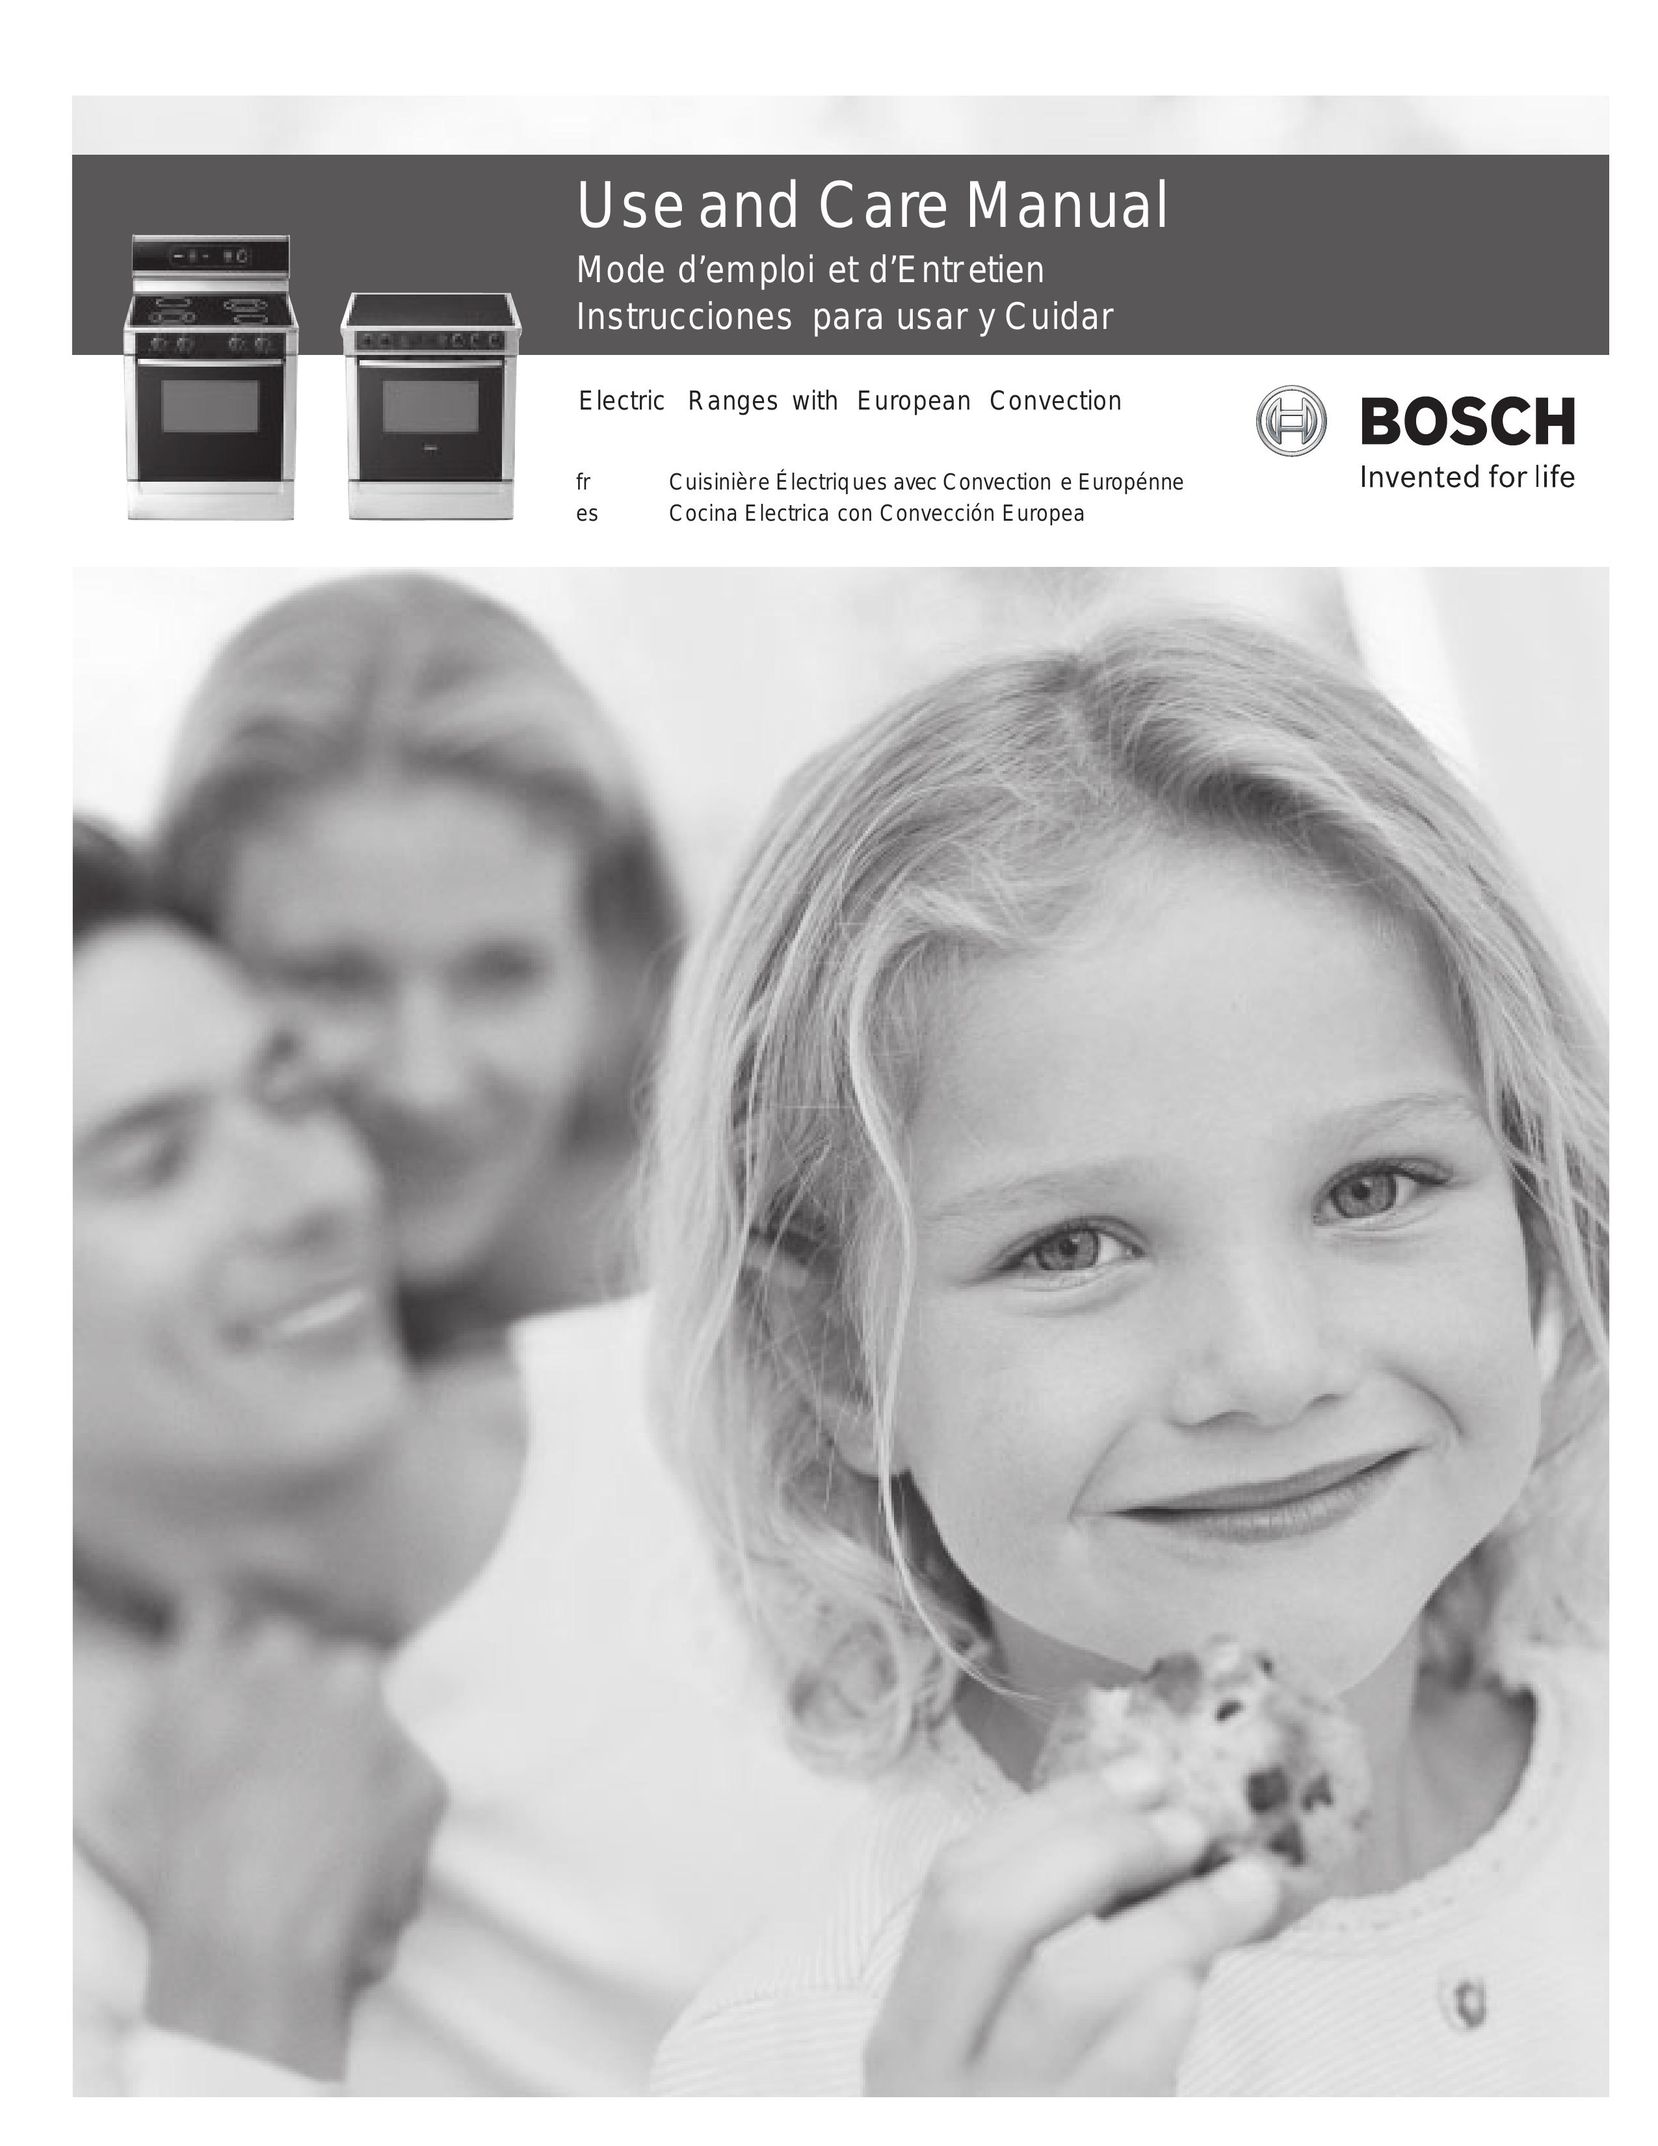 Bosch Appliances BOSCH RANGE Range User Manual